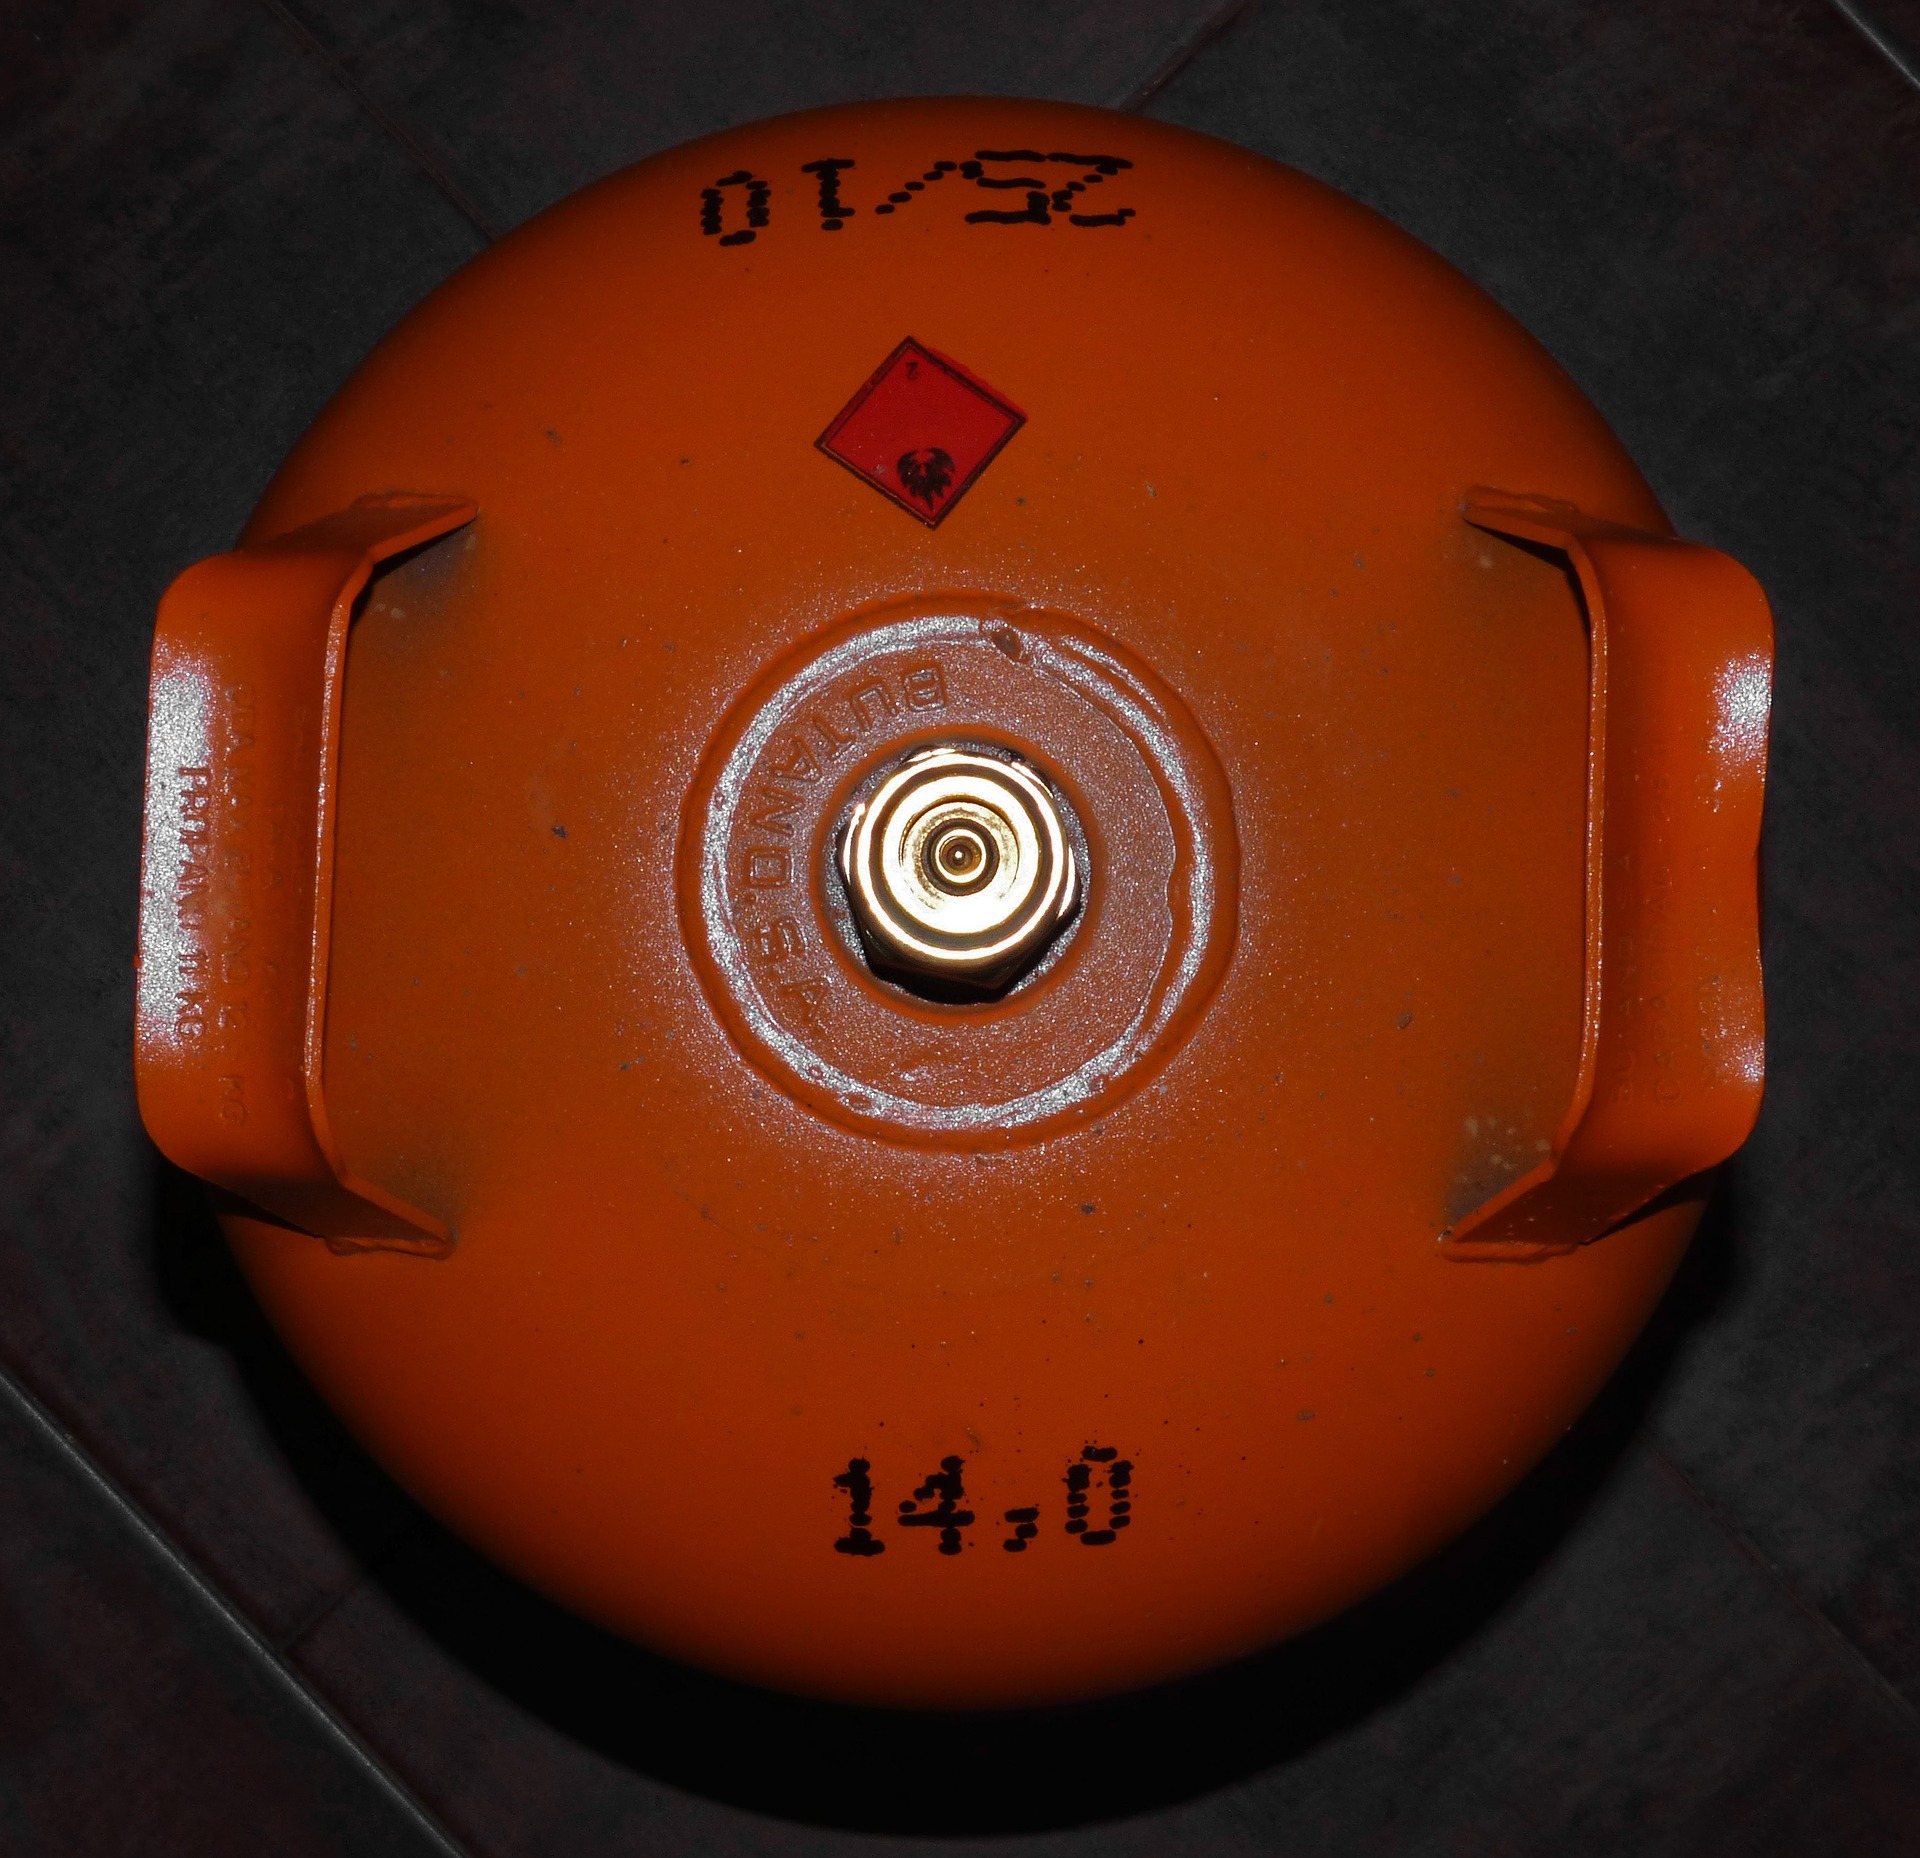 butane-cylinder-g89d64218b_1920.jpg